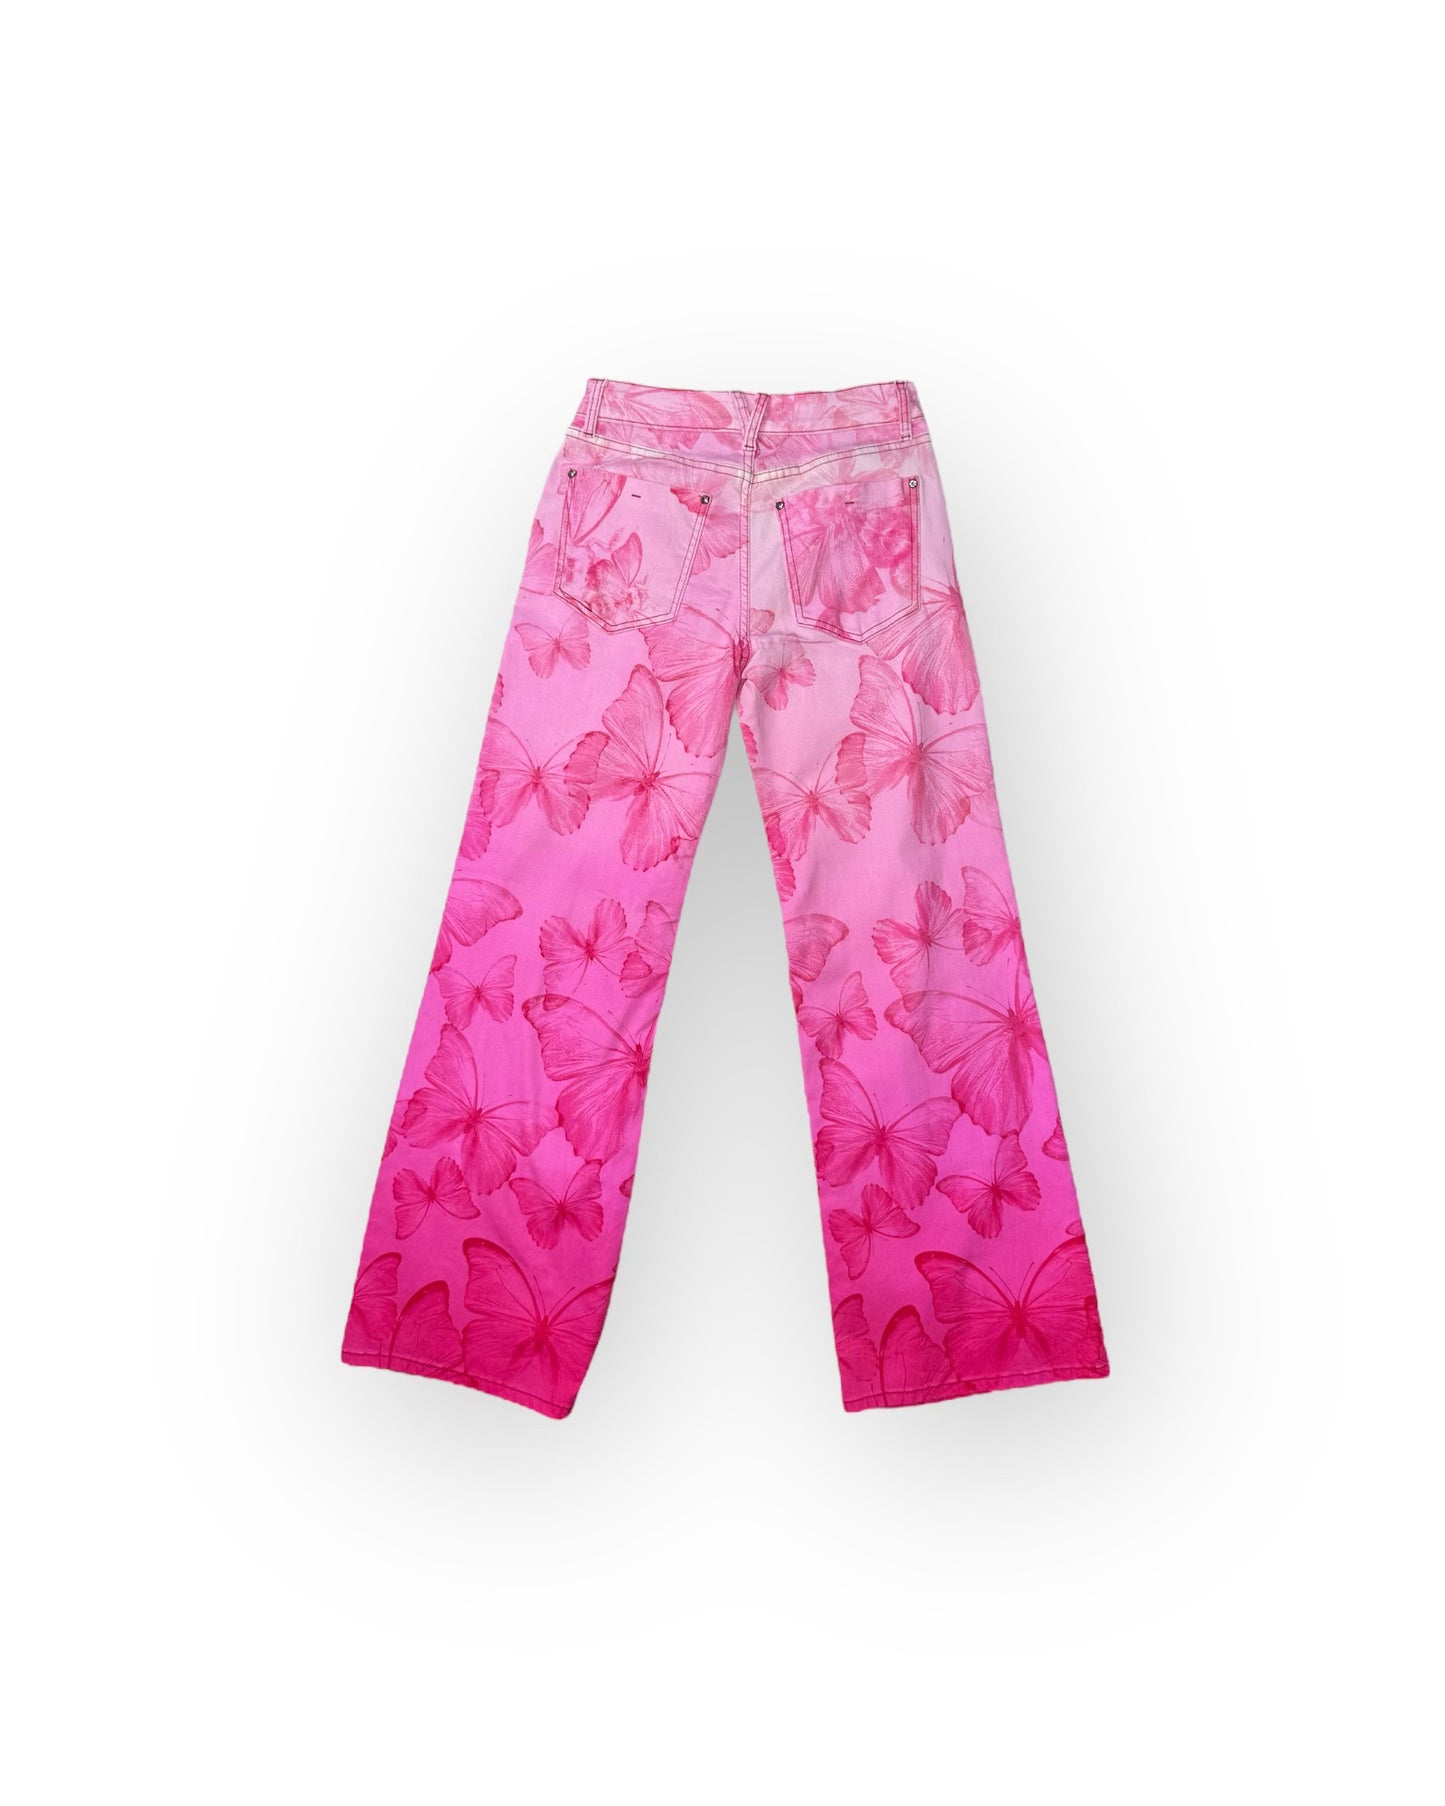 Butterfly Bloom Pink Jeans